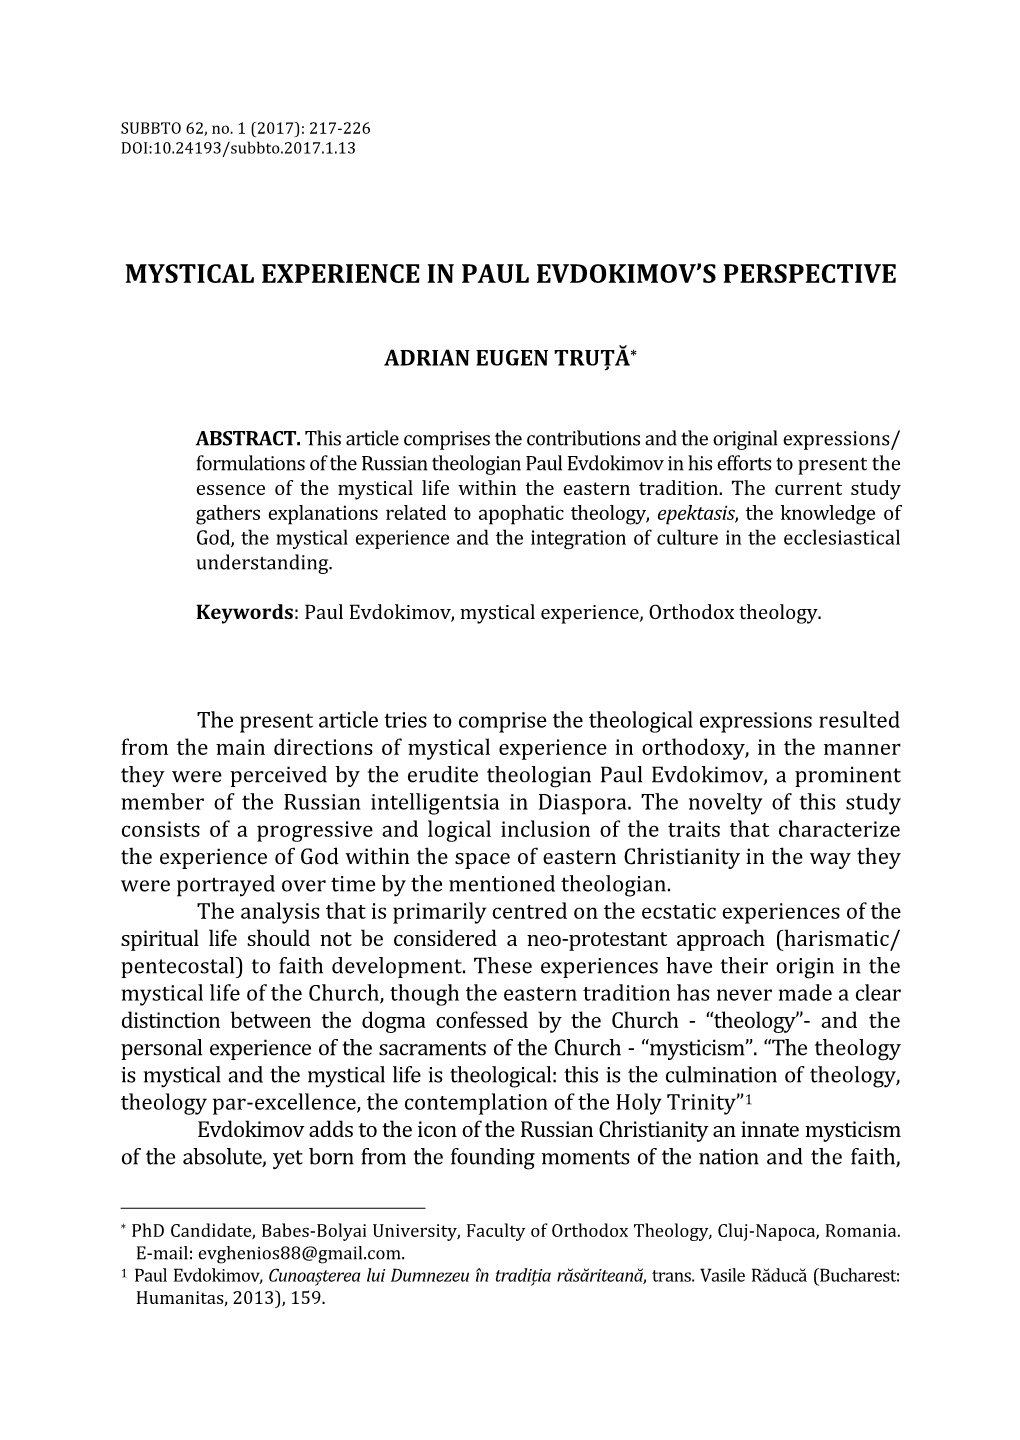 Mystical Experience in Paul Evdokimov's Perspective